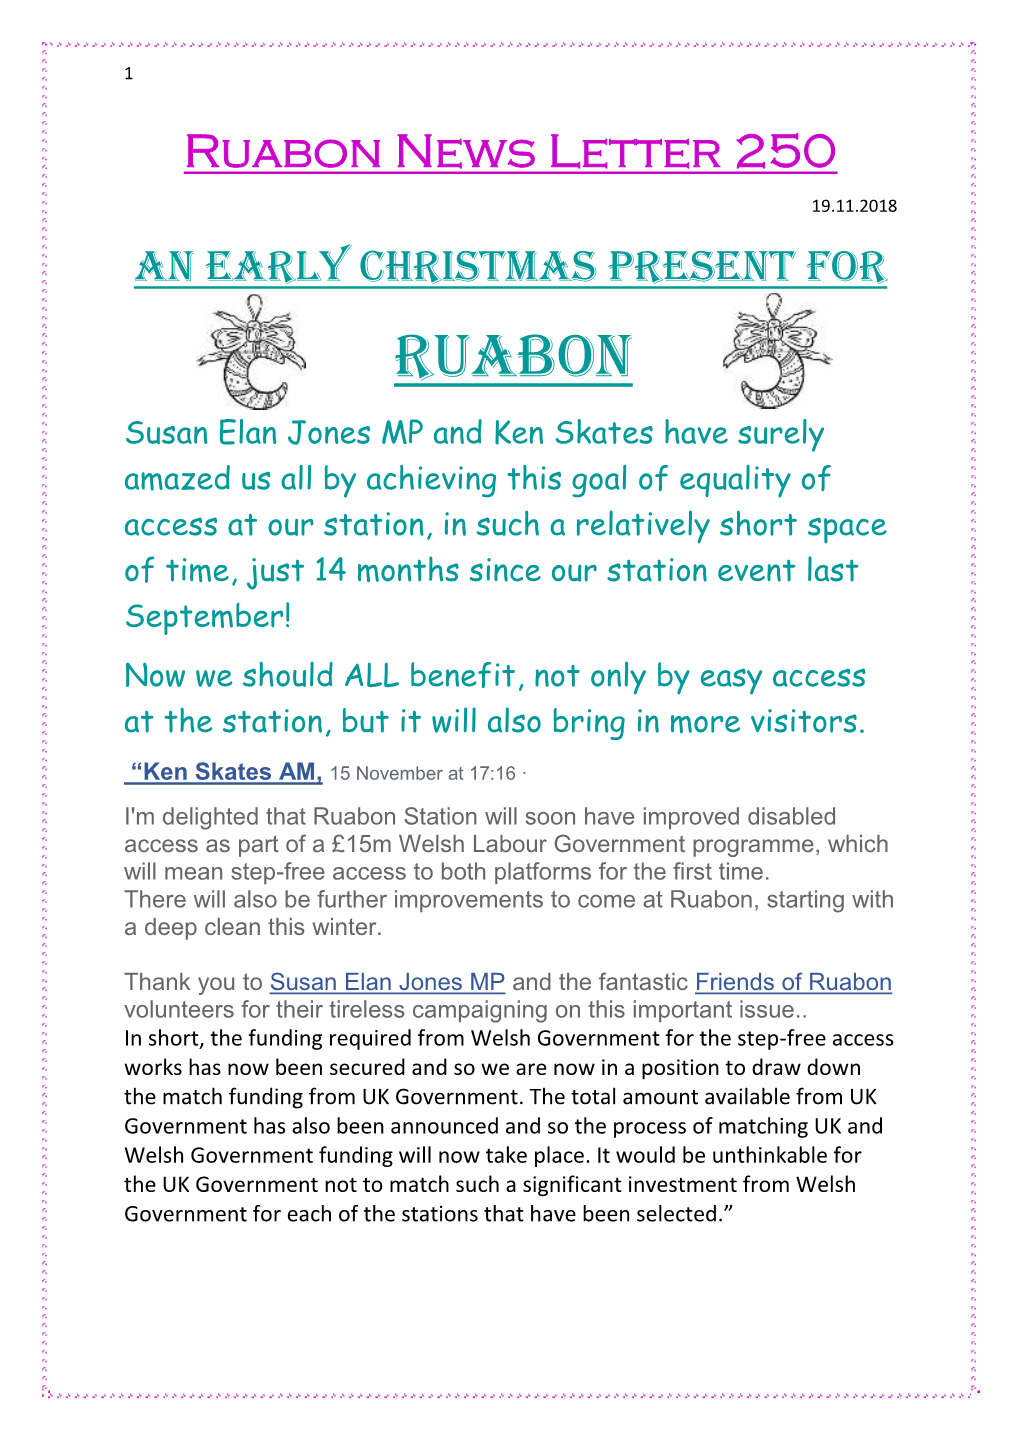 Ruabon News Letter 250